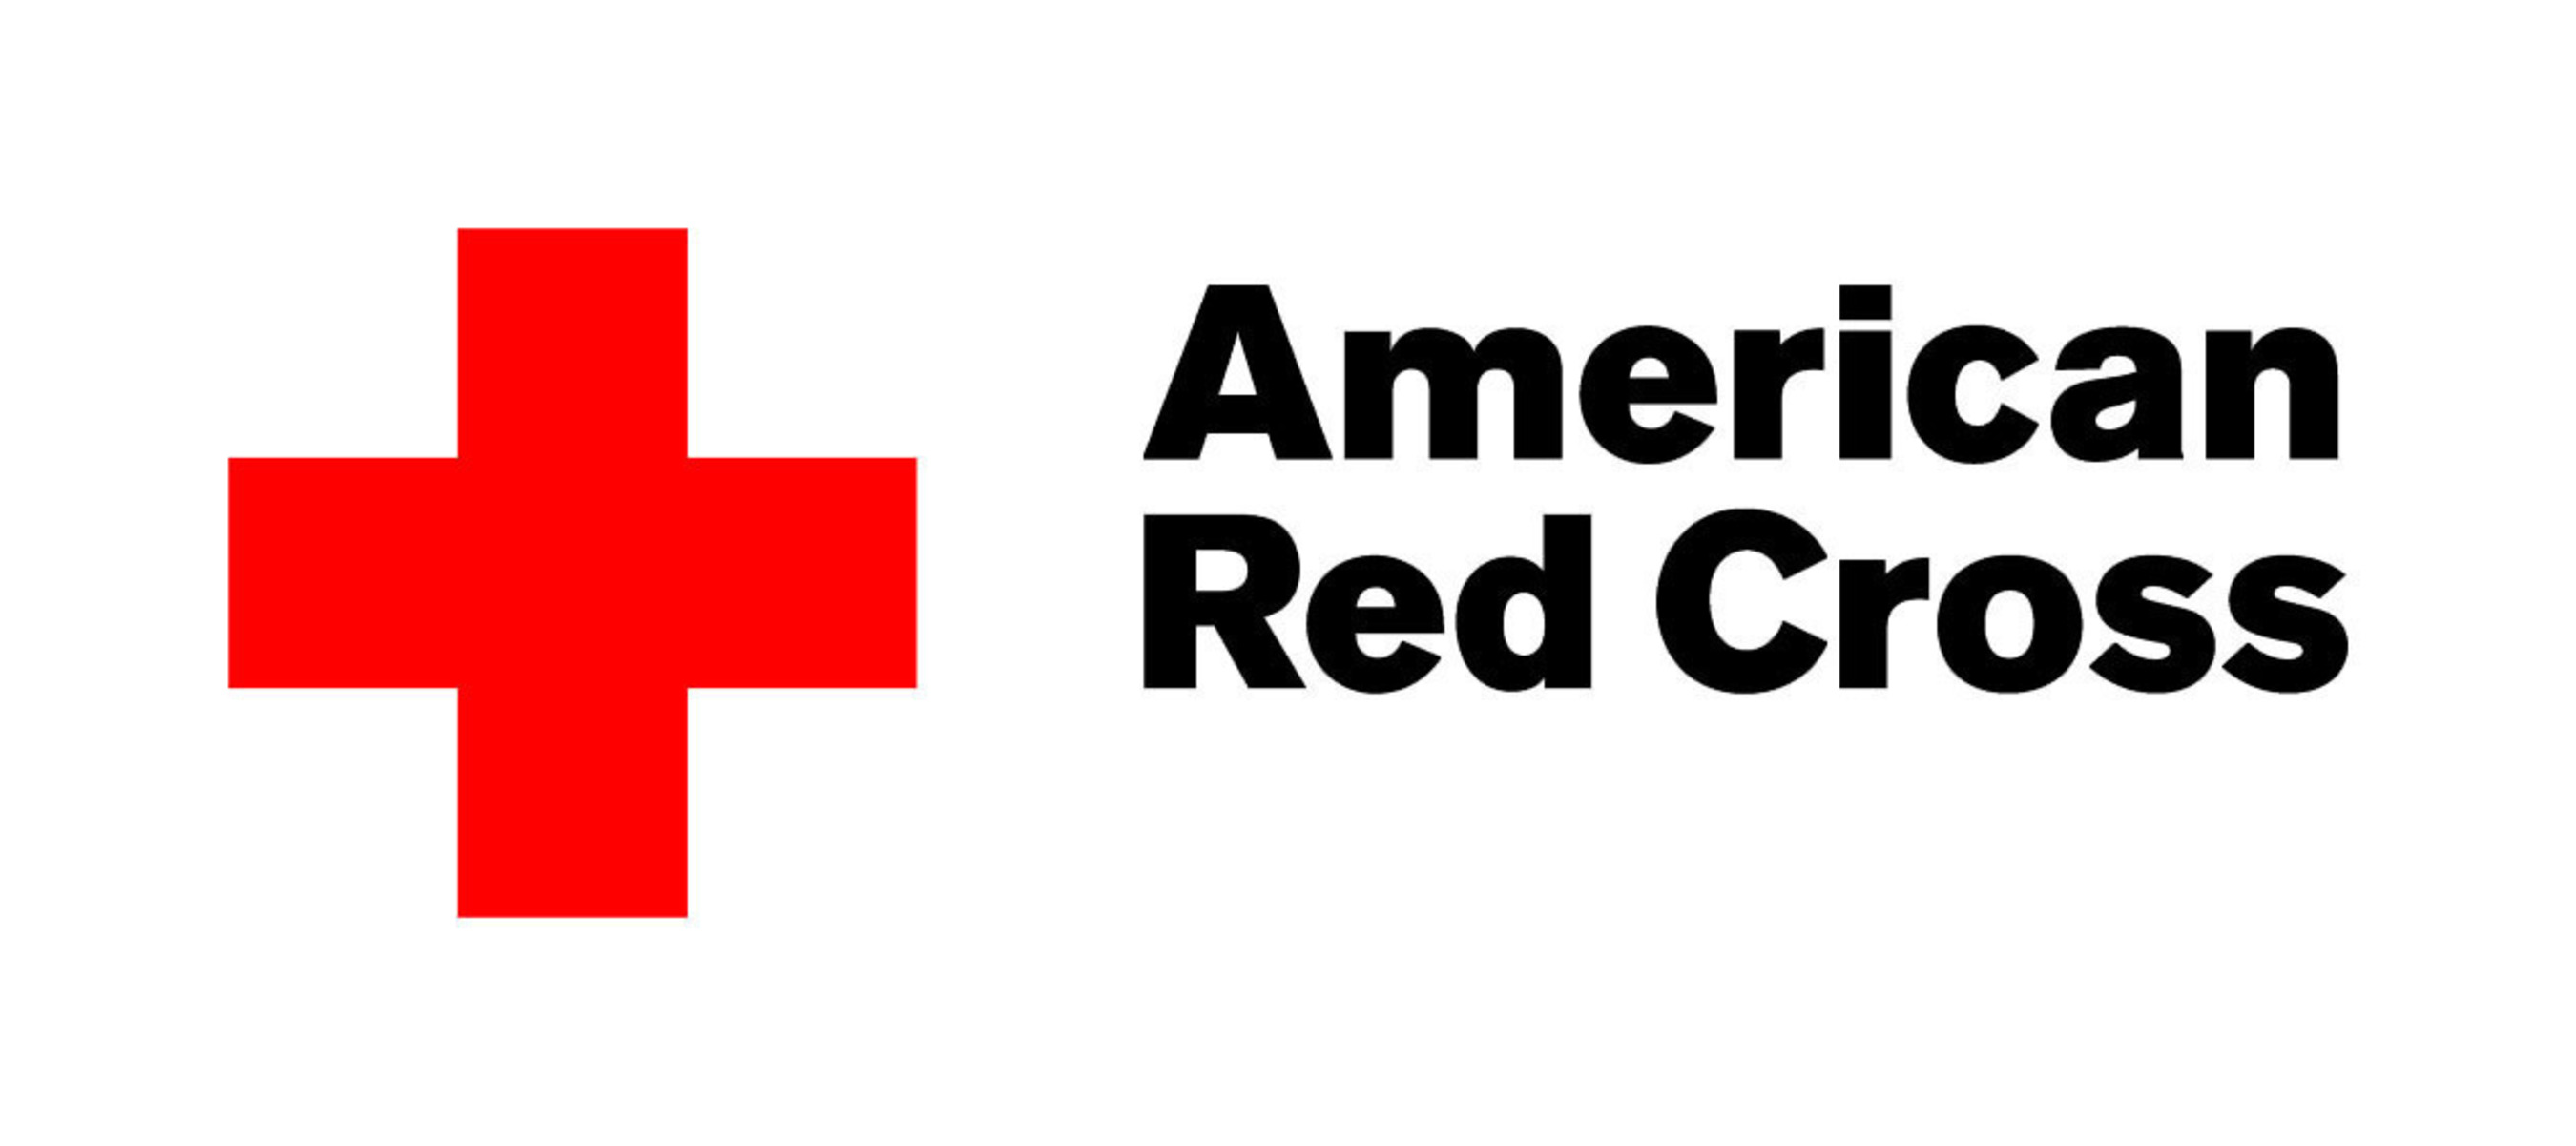 American Red Cross logo. (PRNewsFoto/Lee's Sandwiches International, Inc.) (PRNewsFoto/LEE'S SANDWICHES INTL, INC.)